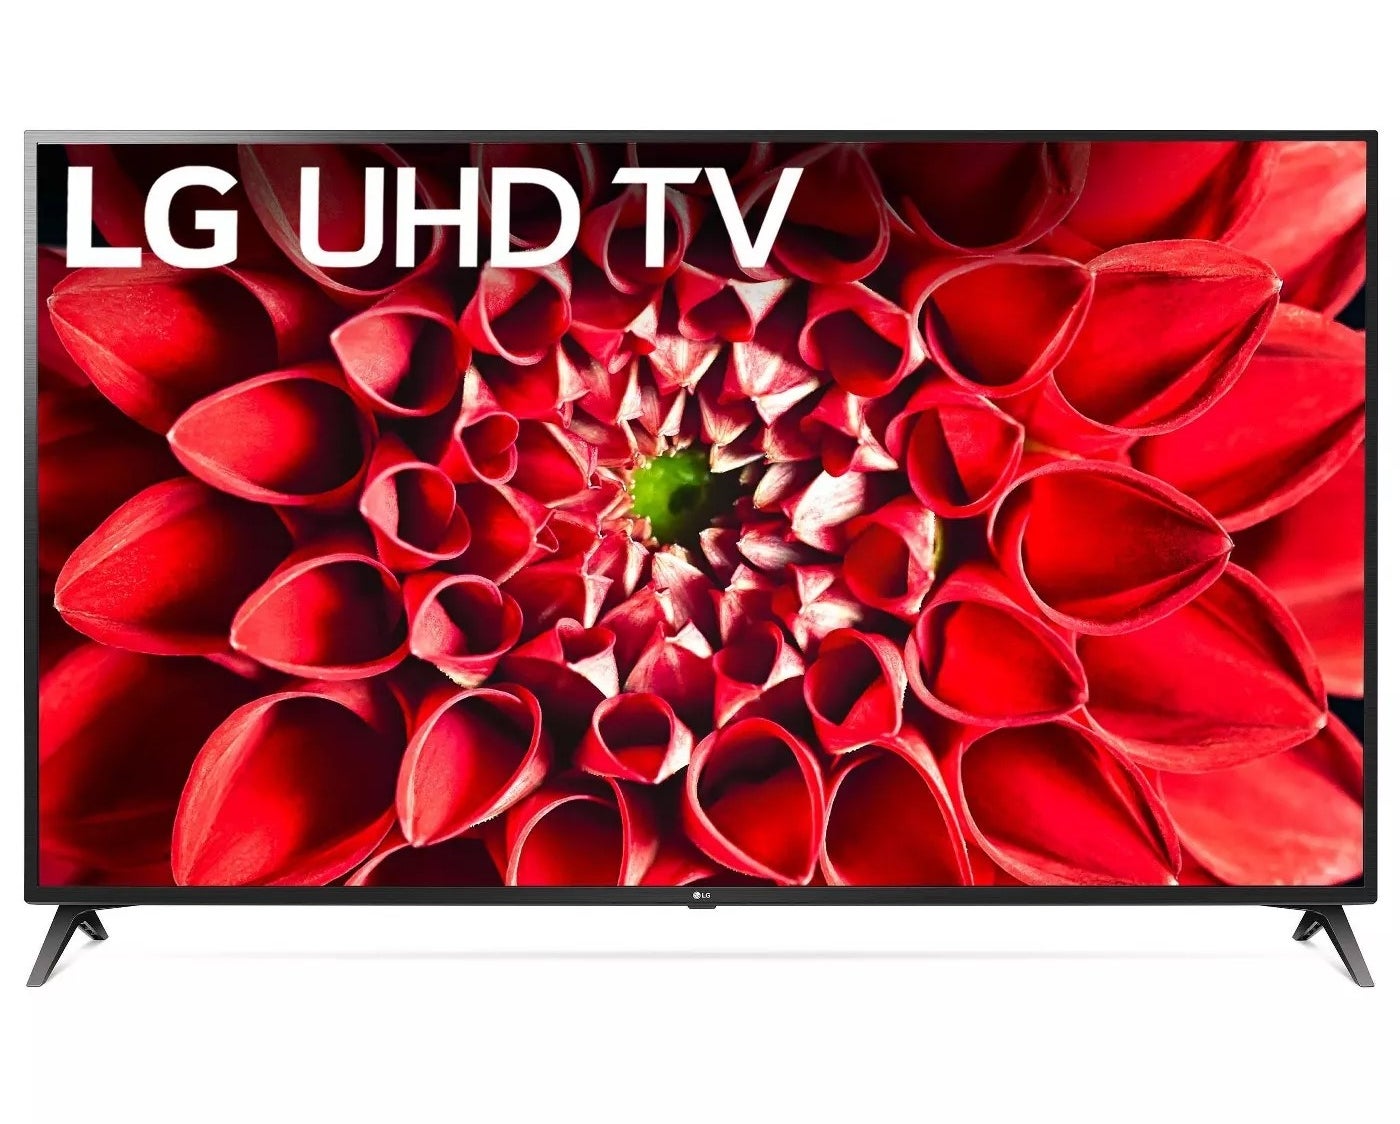 The LG UHD TV